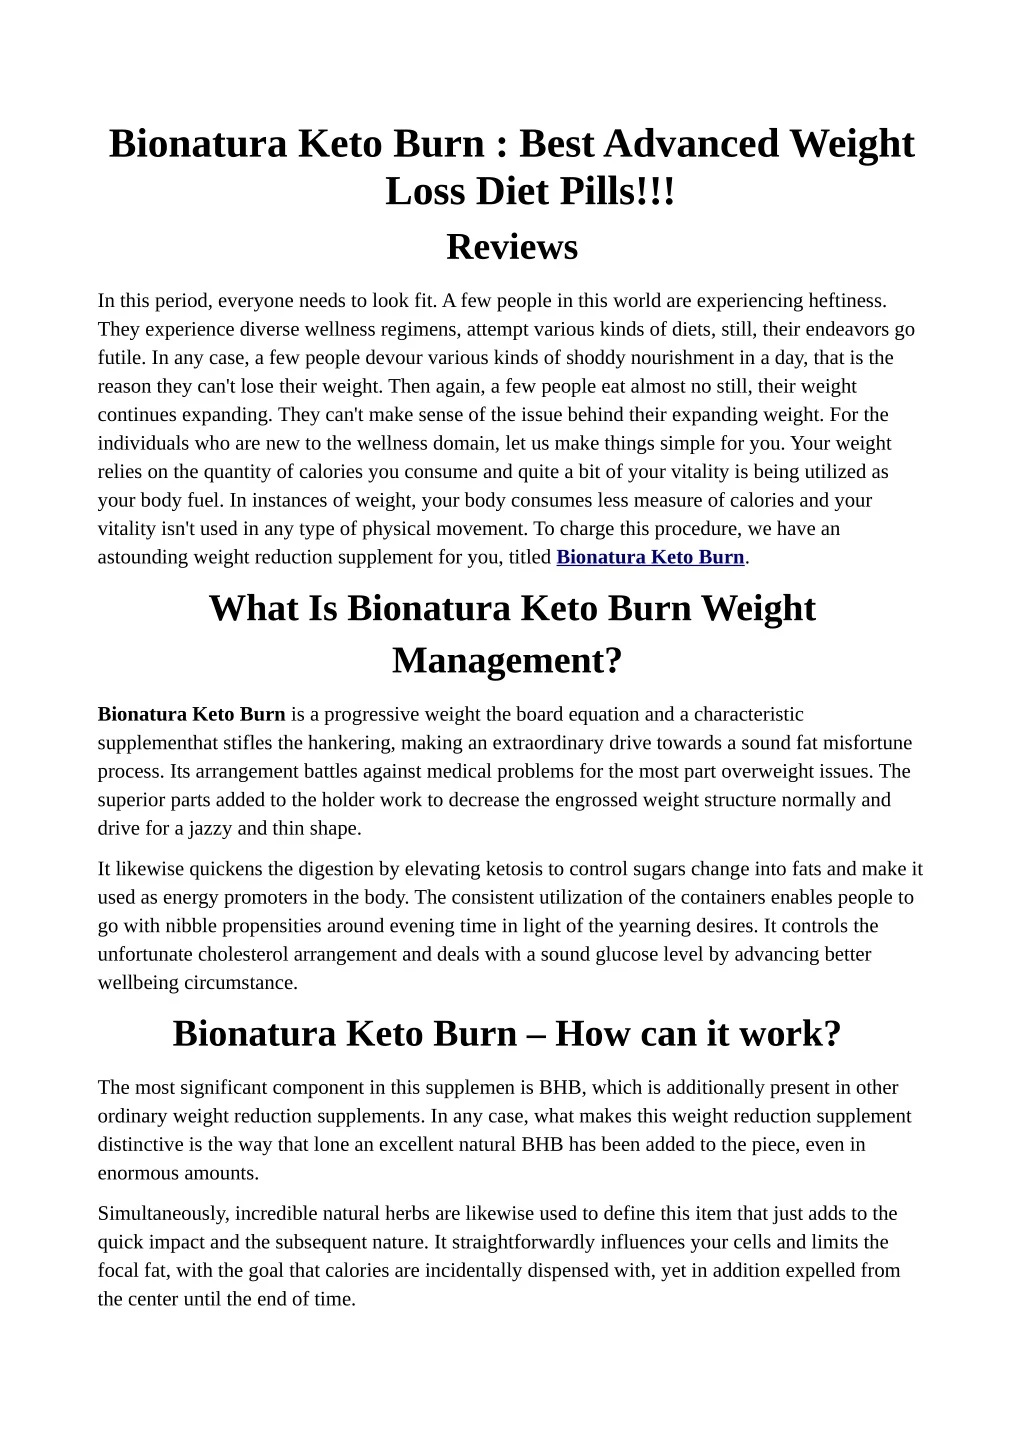 bionatura keto burn best advanced weight loss